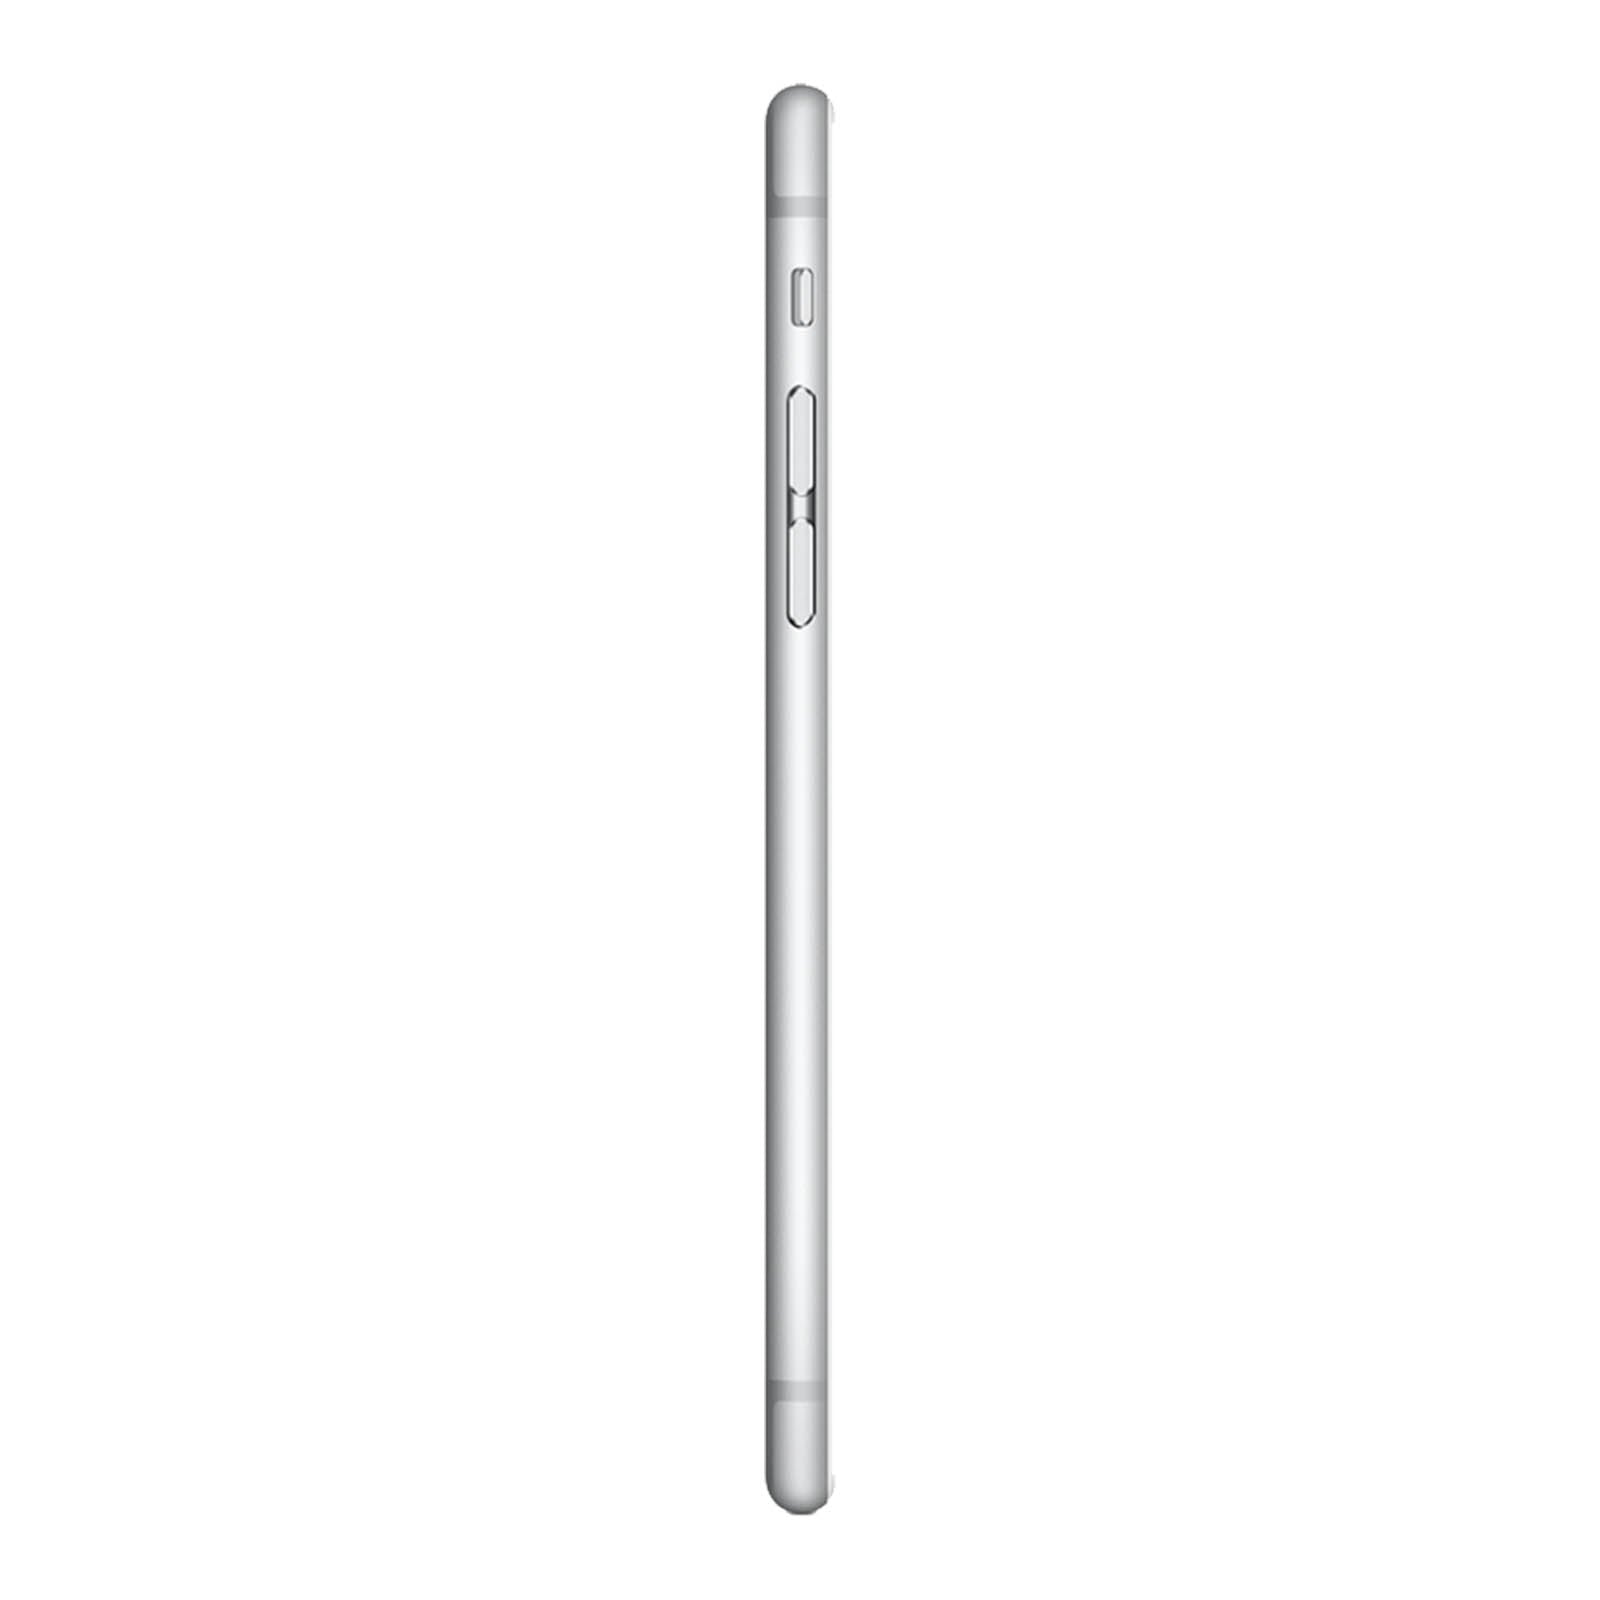 Apple iPhone 6S Plus 32GB Silver Good - Unlocked